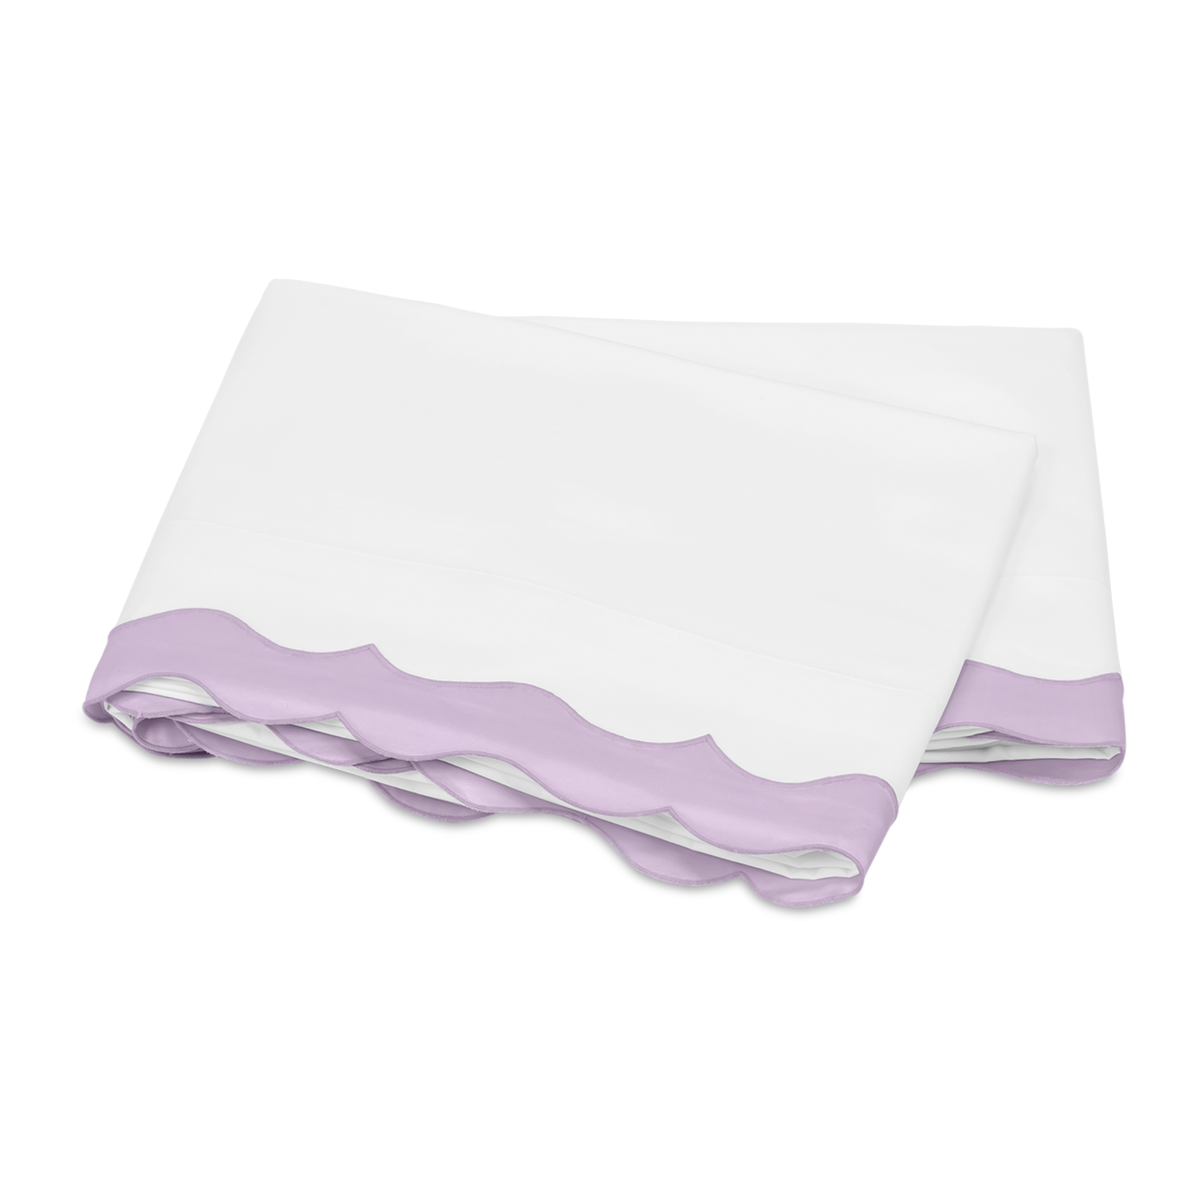 Folded Flat Sheet of Matouk Lorelei Bedding in Violet Color